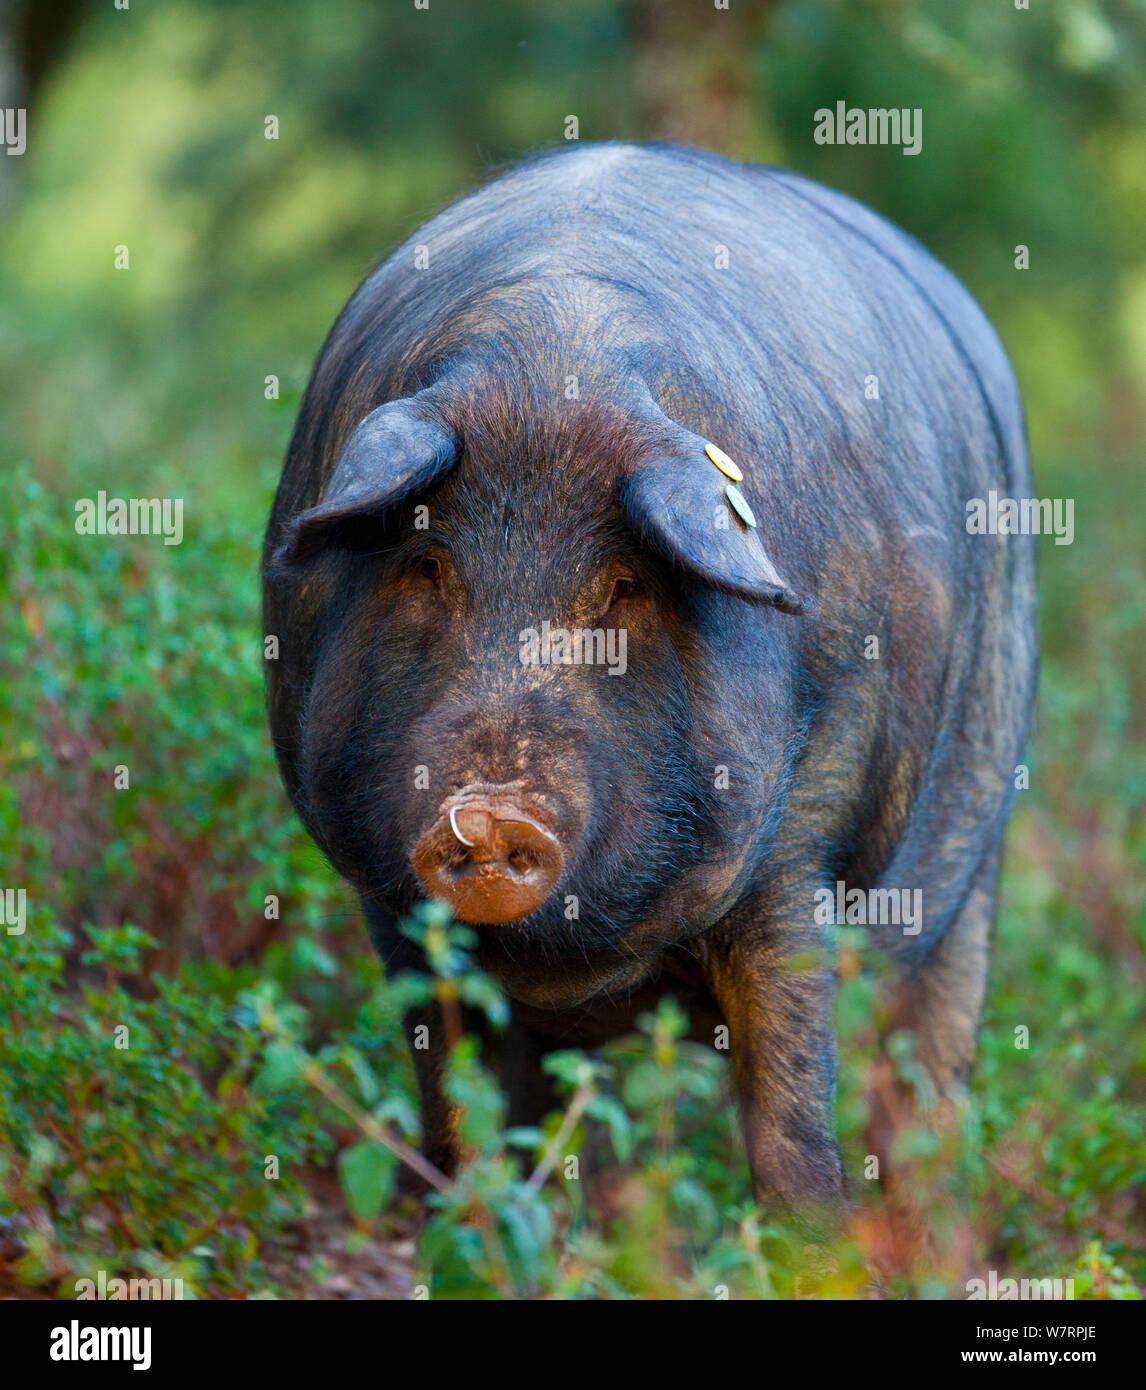 Iberian pig, Sierra de Aracena Natural Park, Huelva, Andalucia, Spain, Europe. Breed used to produce Iberico ham / Jamon Iberico Stock Photo